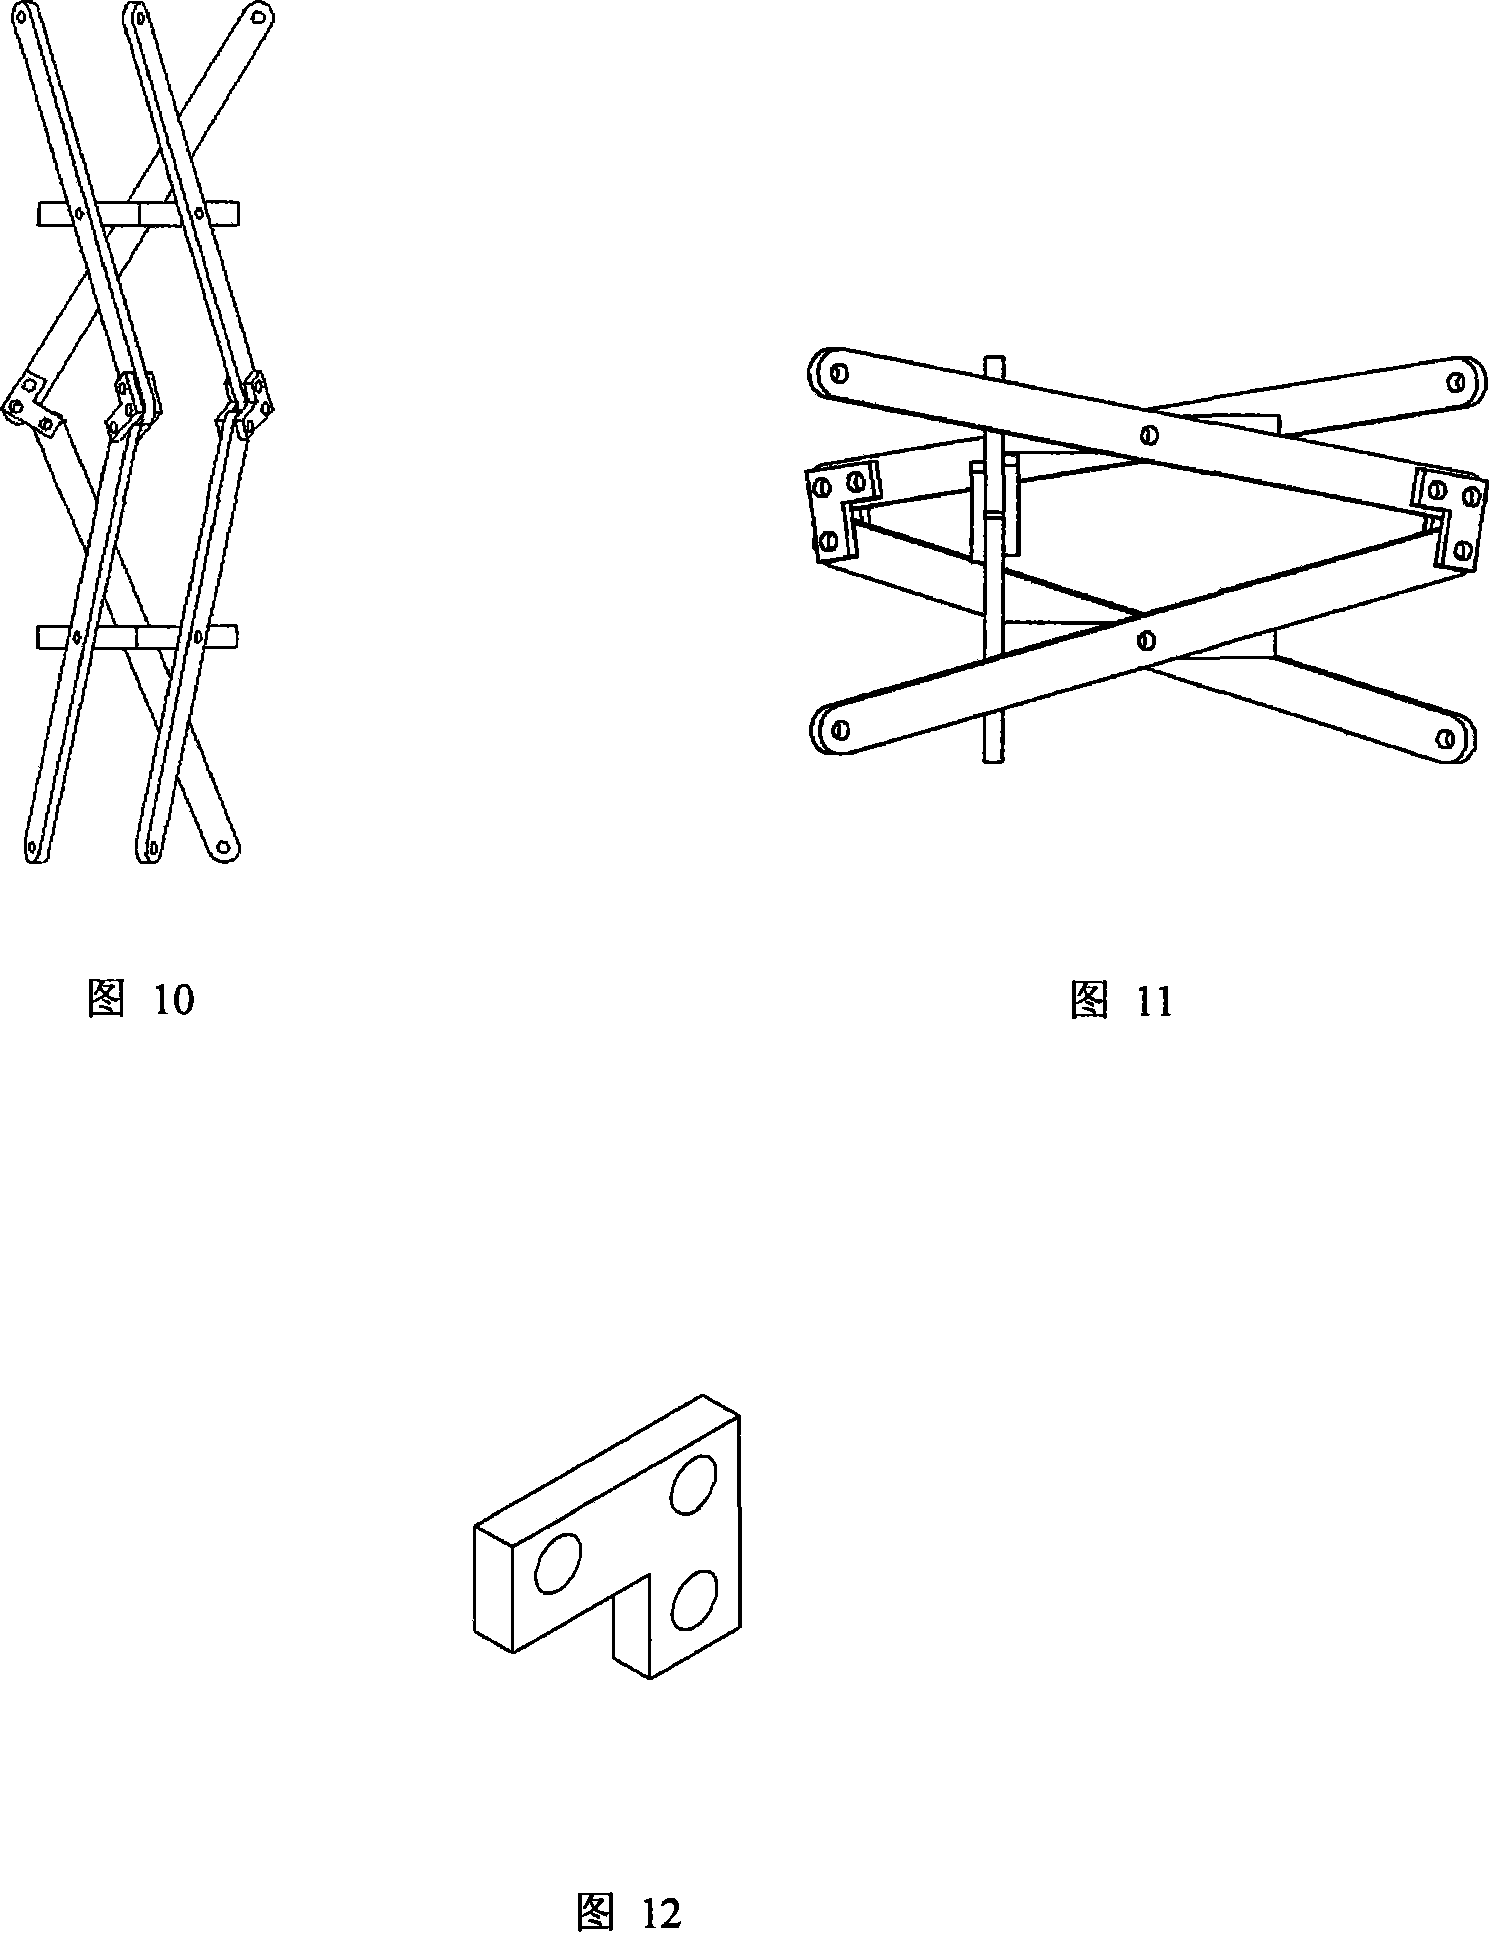 Zigzag rod space telescopic mechanism